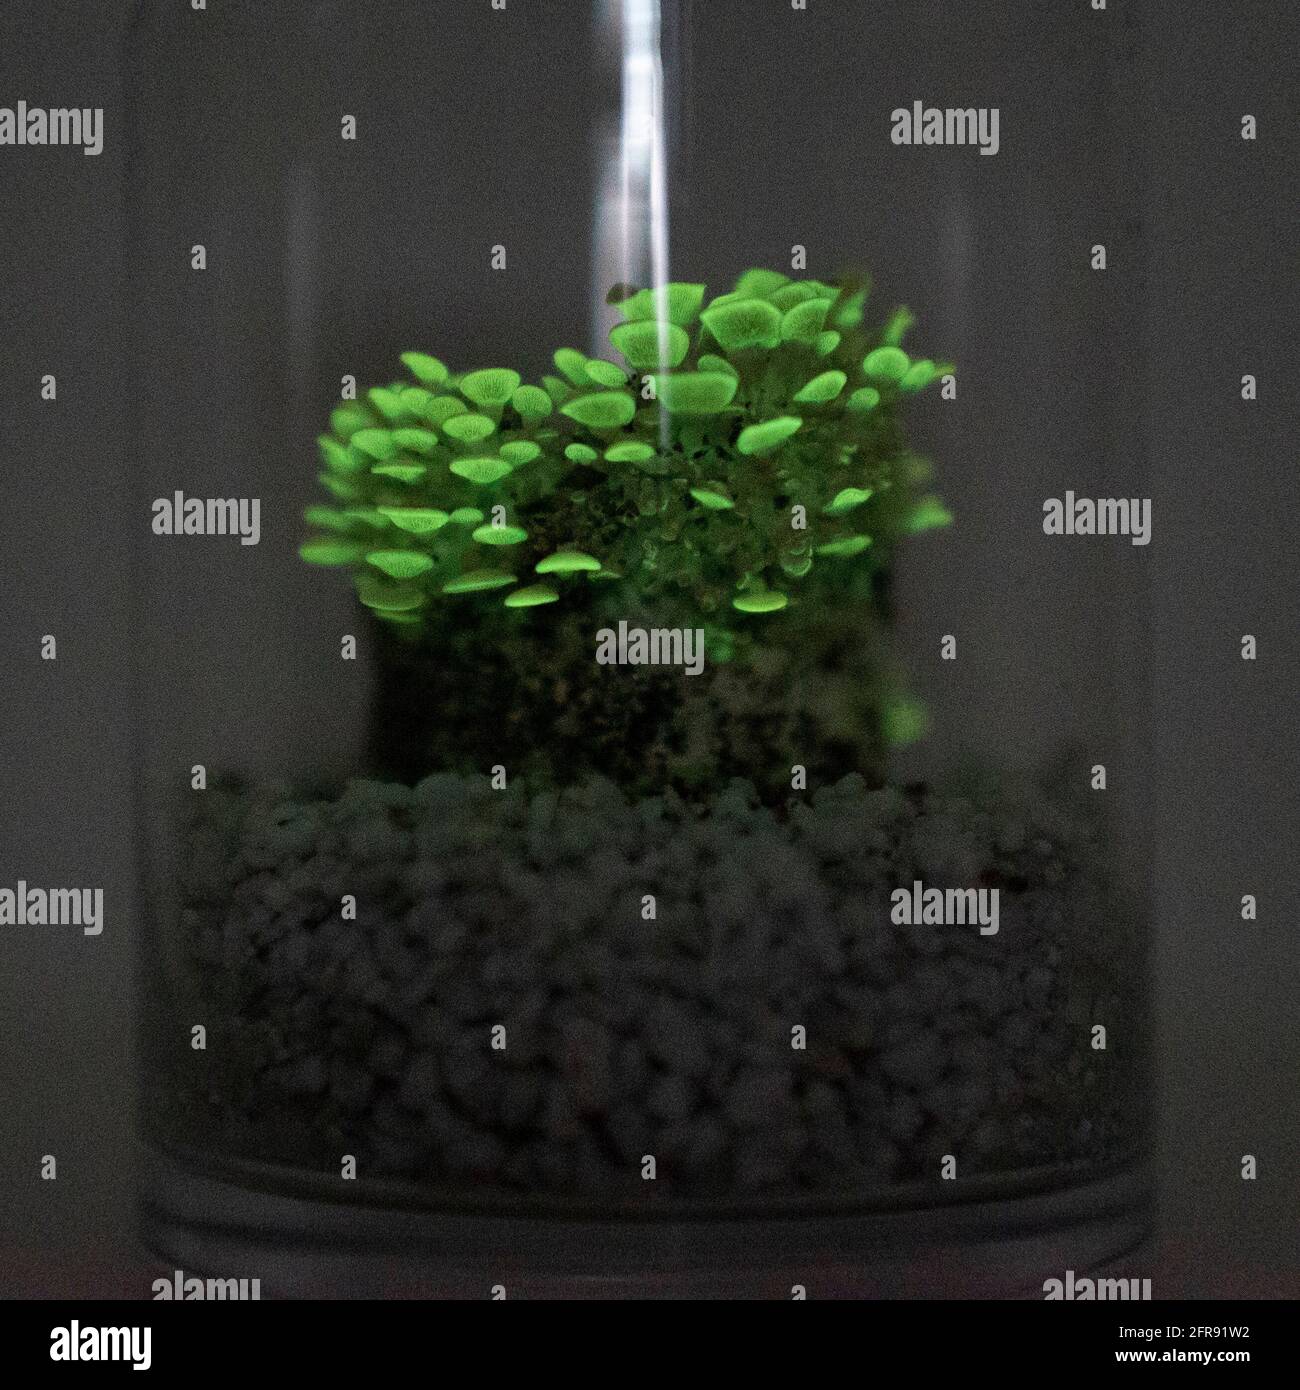 Setas bioluminiscentes verdes En el tarro de vidrio, estas setas se cultivaron a partir de una torta de micelium de P stiticus. Foto de stock